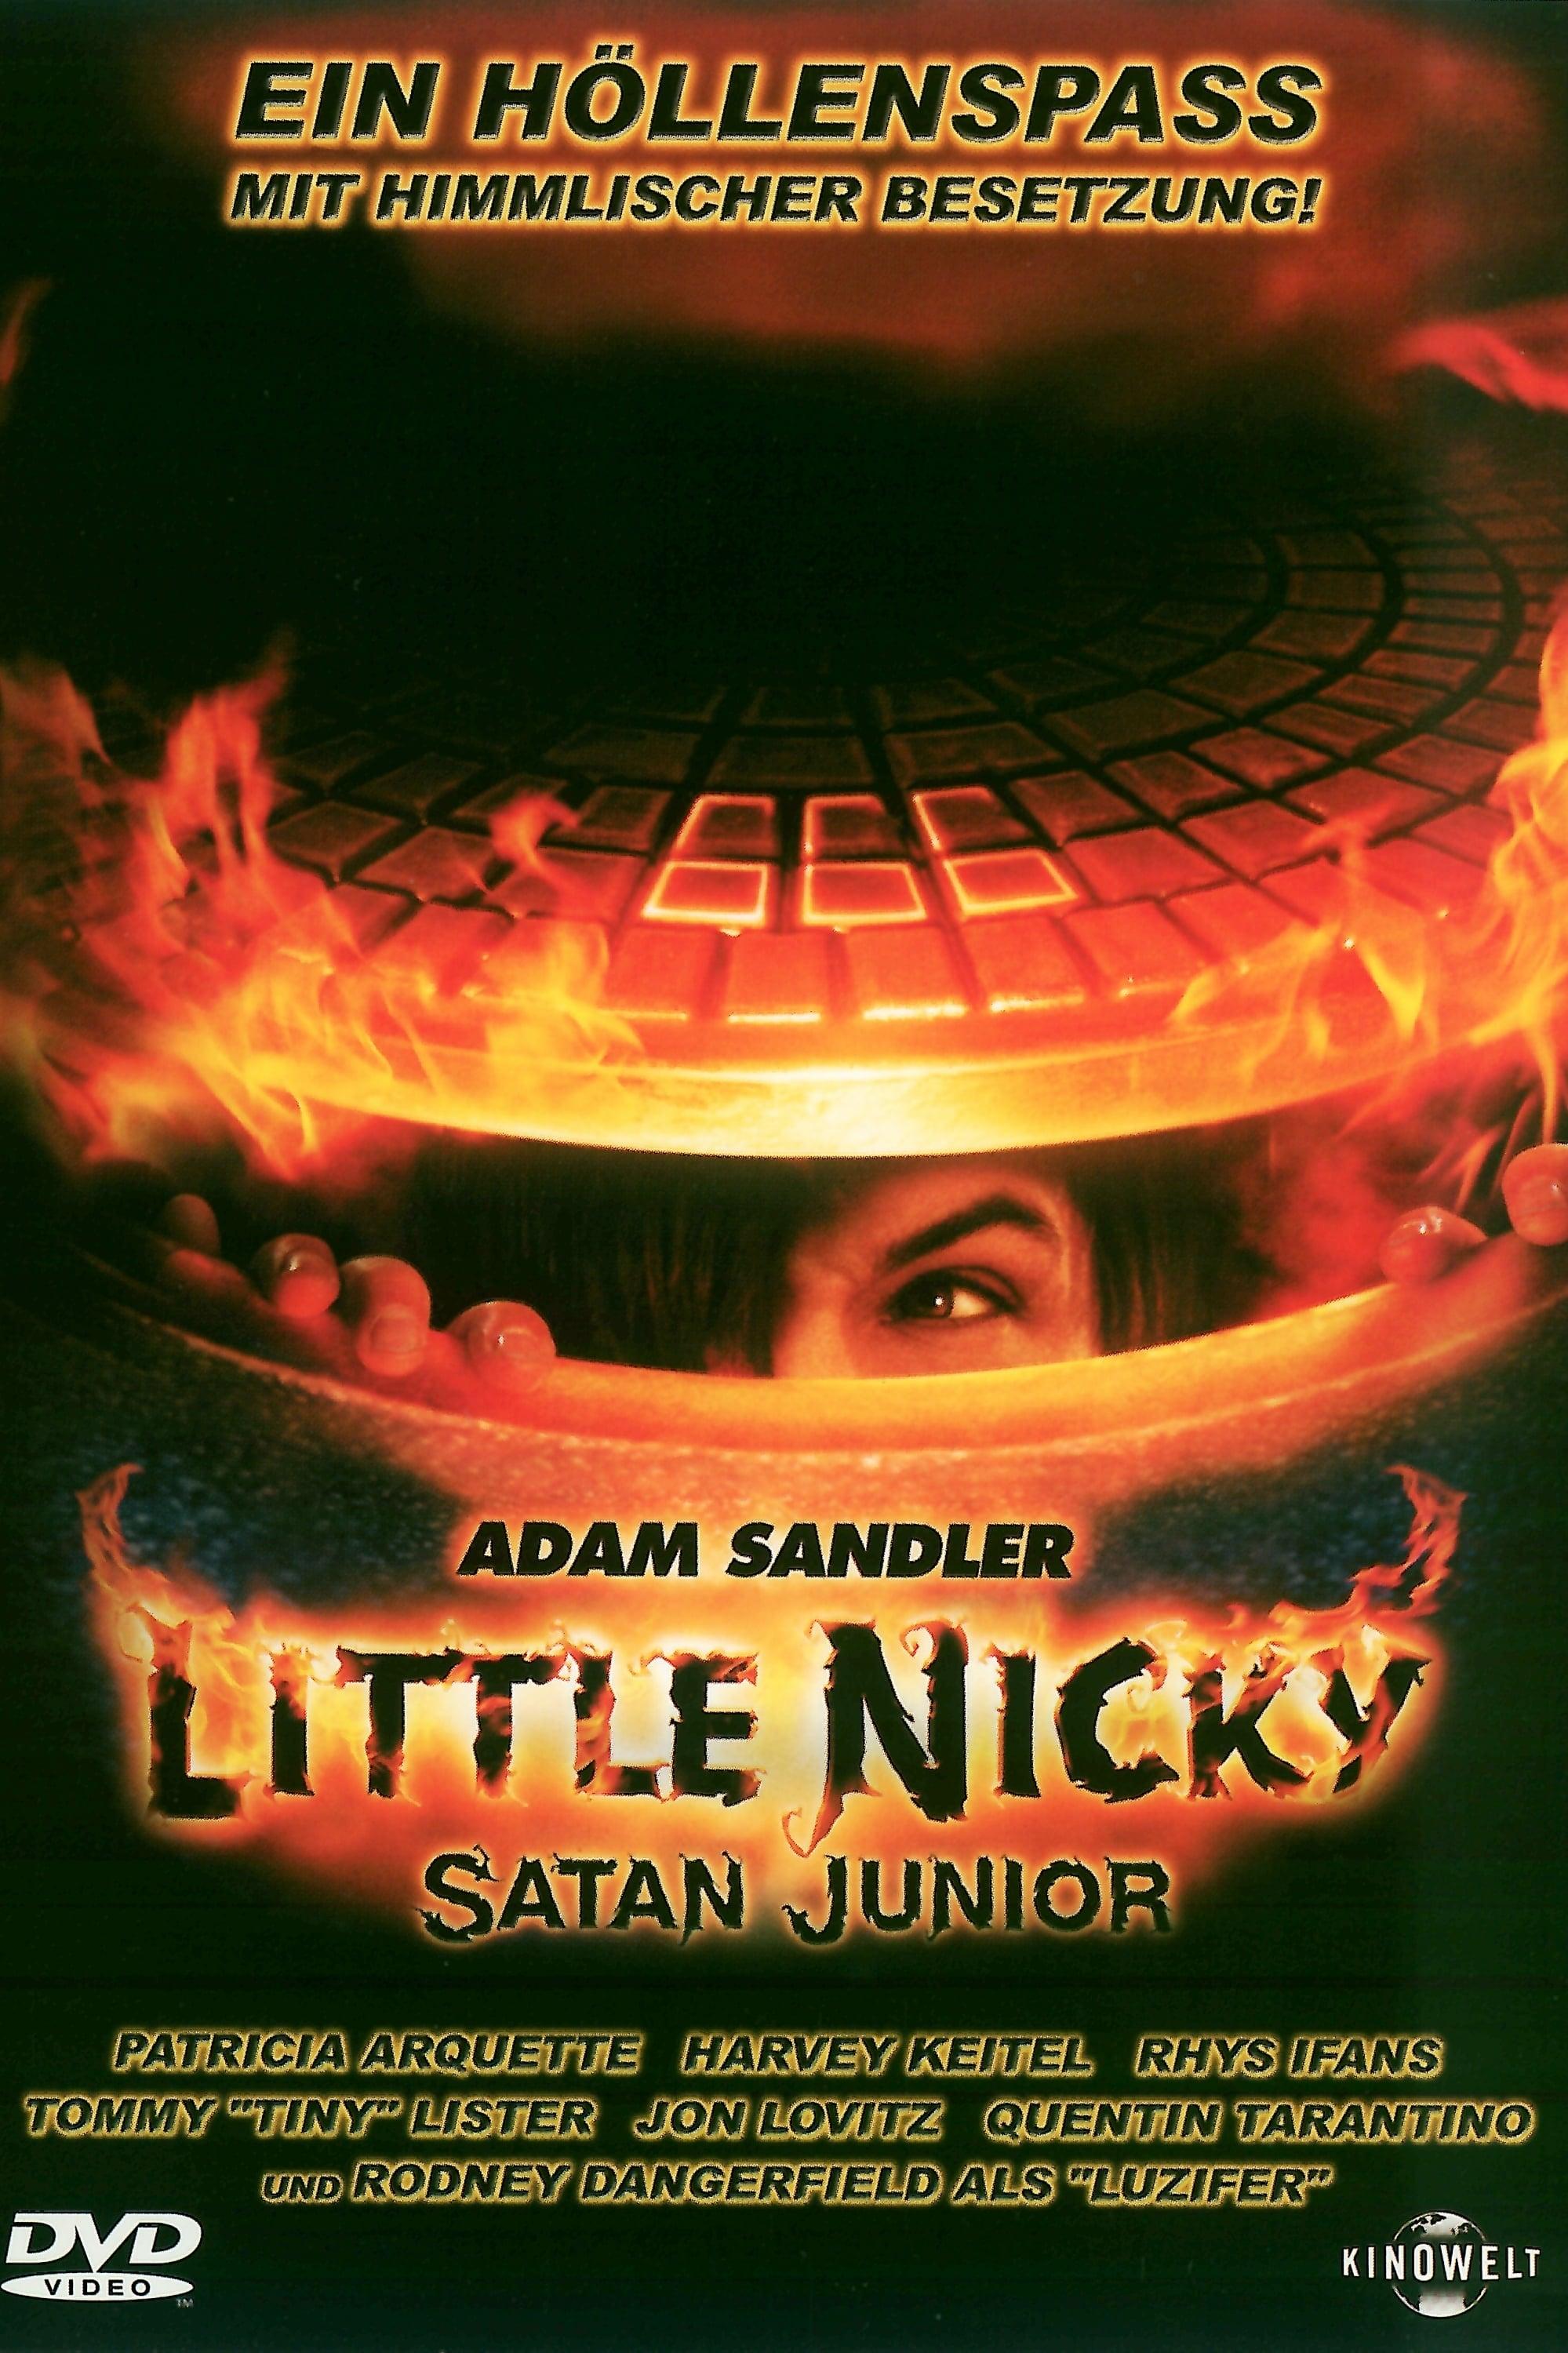 Little Nicky - Satan Junior poster